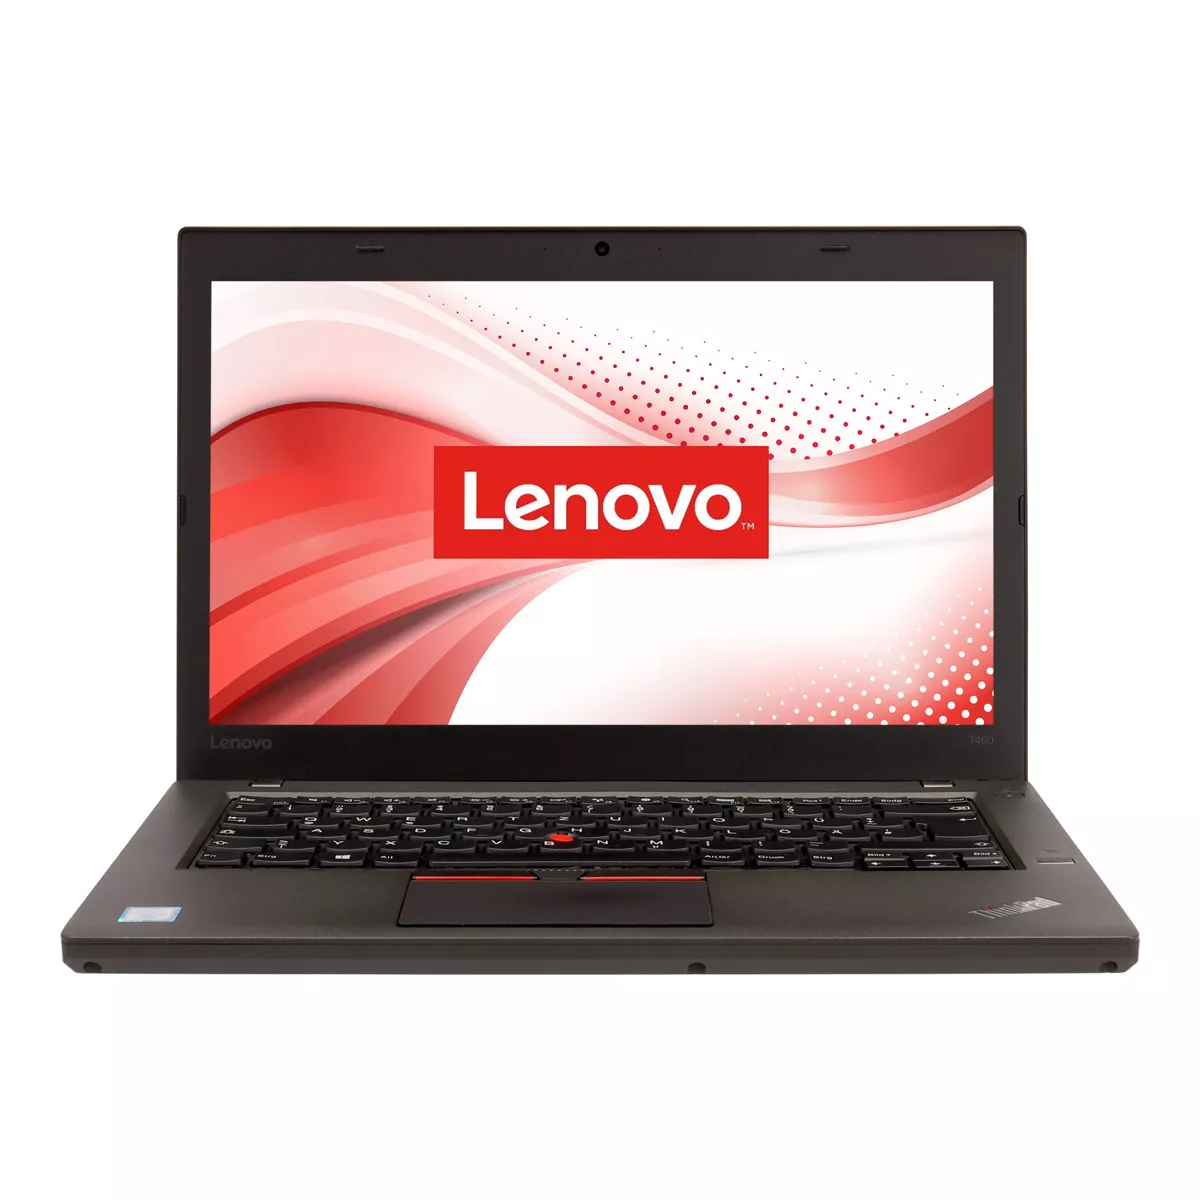 Lenovo ThinkPad T480 Core i5 8350U Full-HD Touch 500 GB M.2 nVME SSD Webcam A